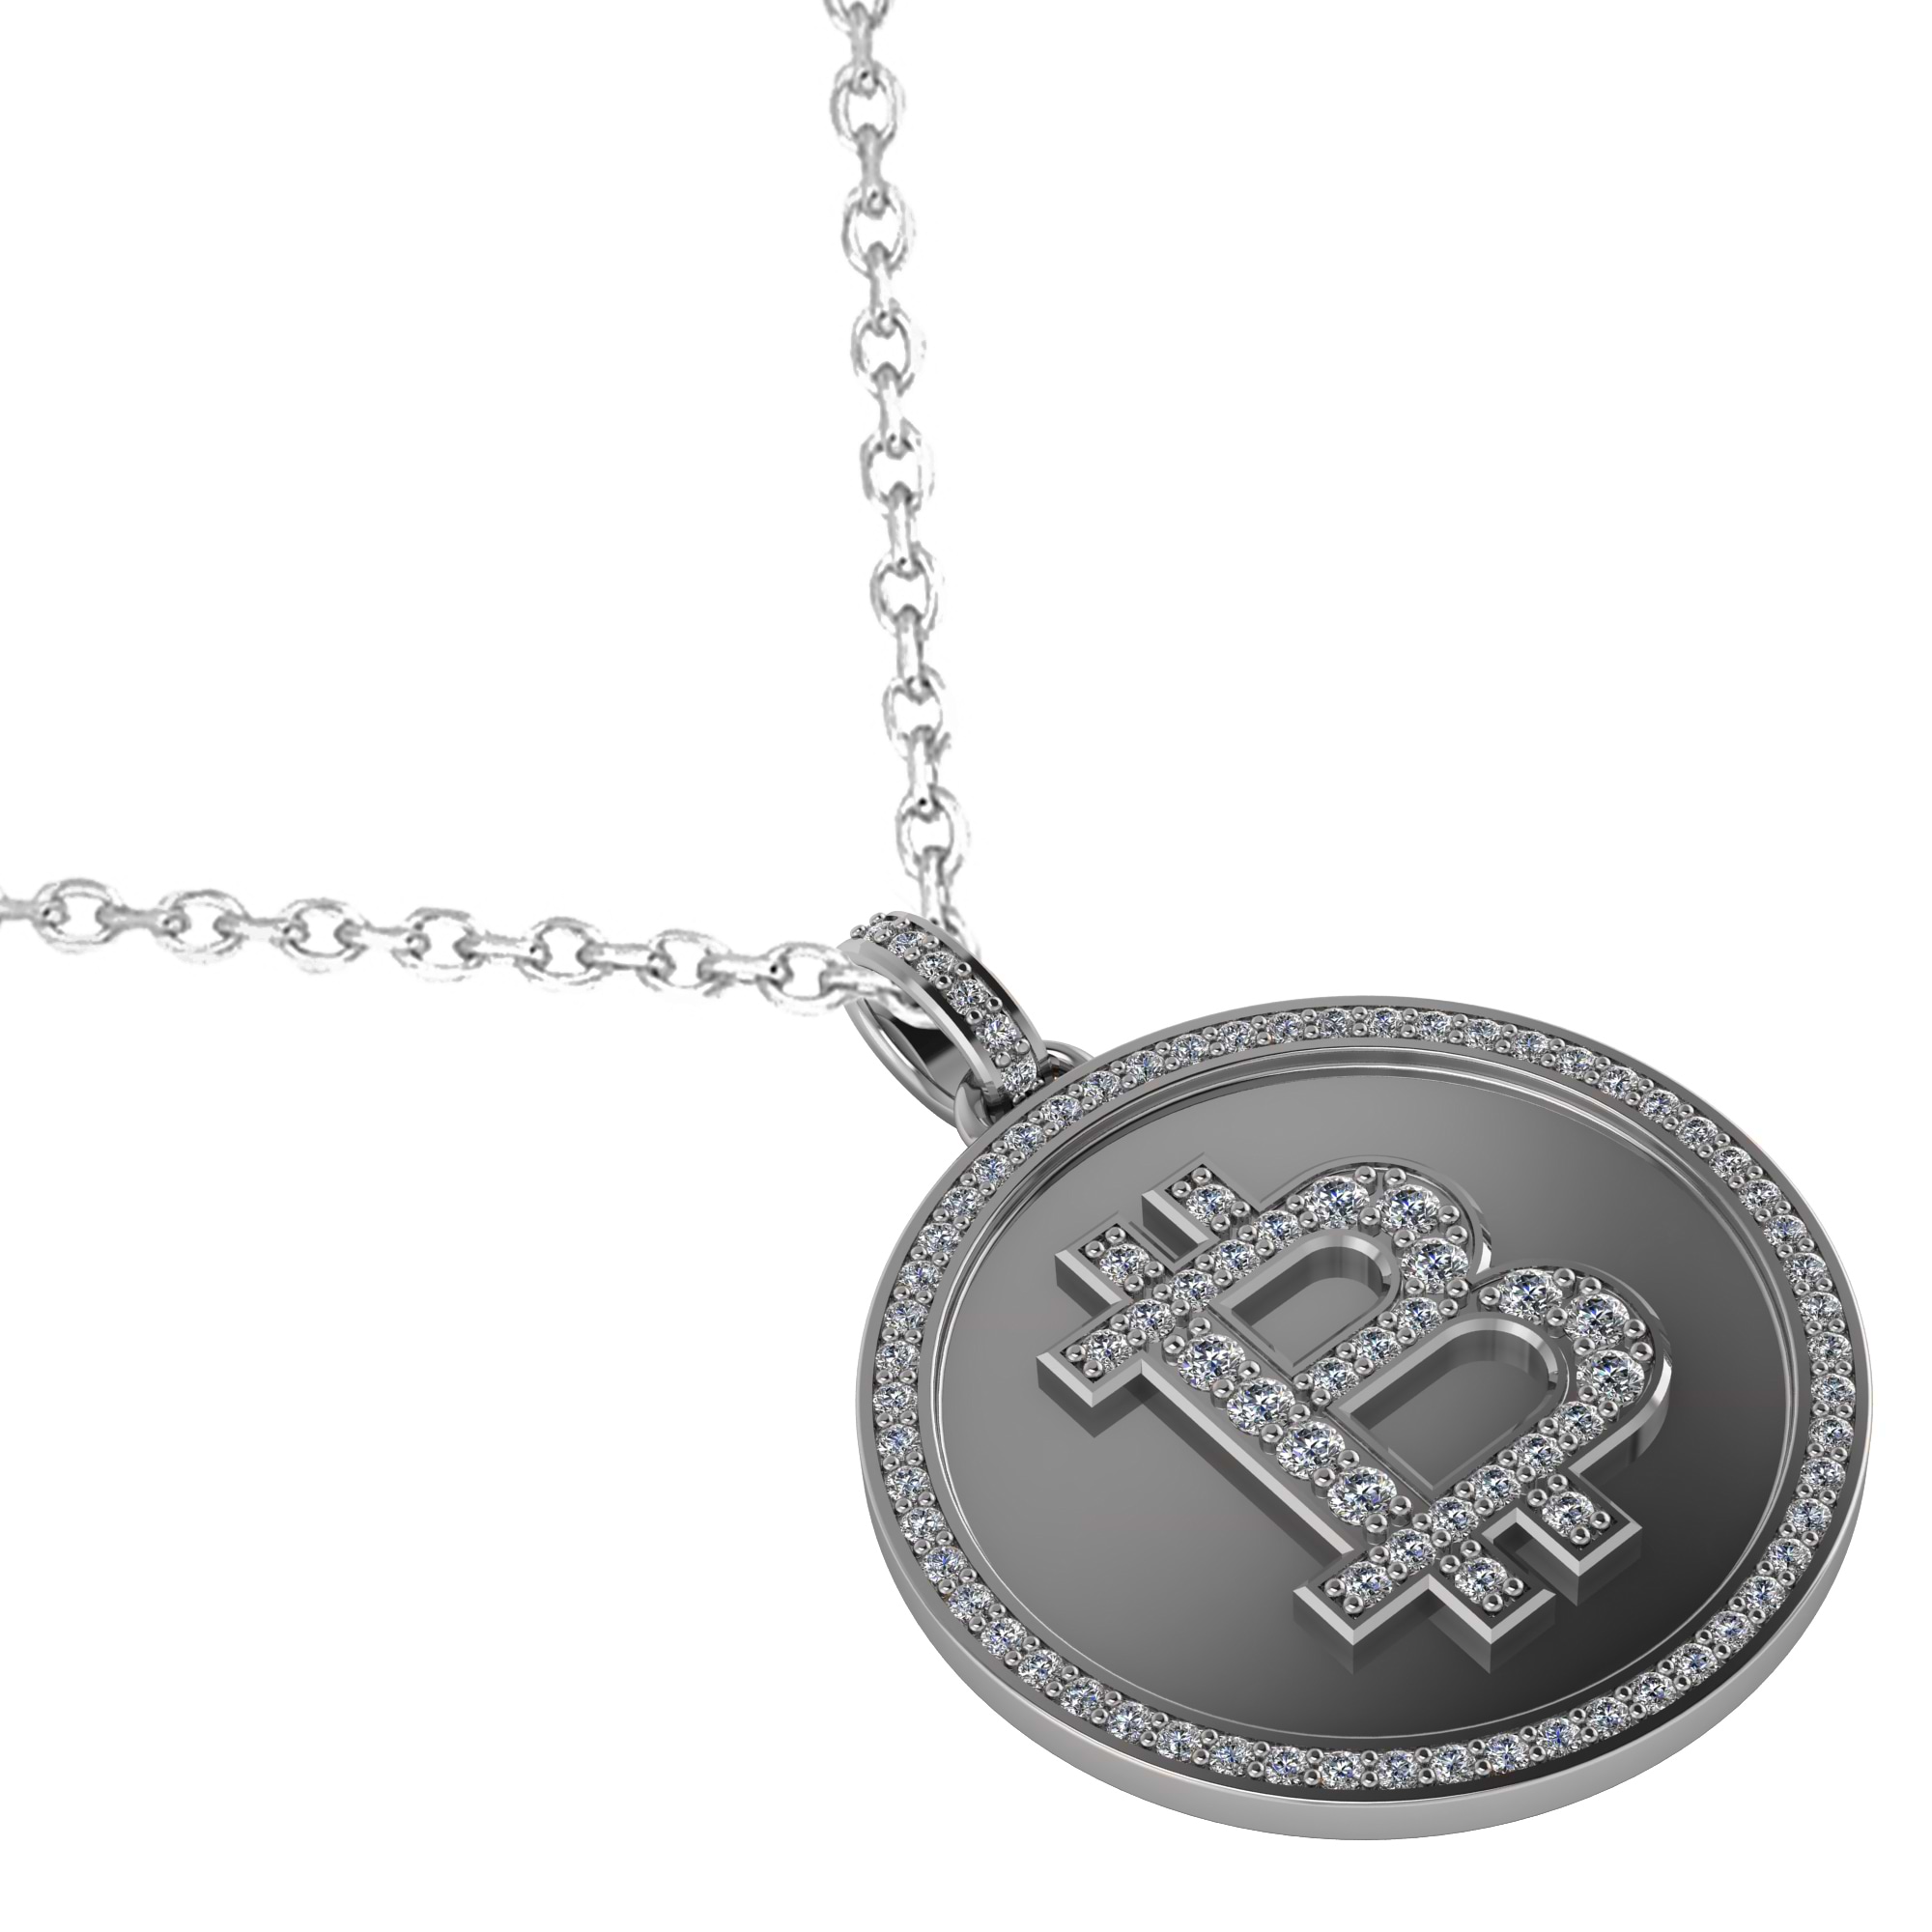 Large Diamond Bitcoin Pendant Necklace 14k White Gold (1.21ct)